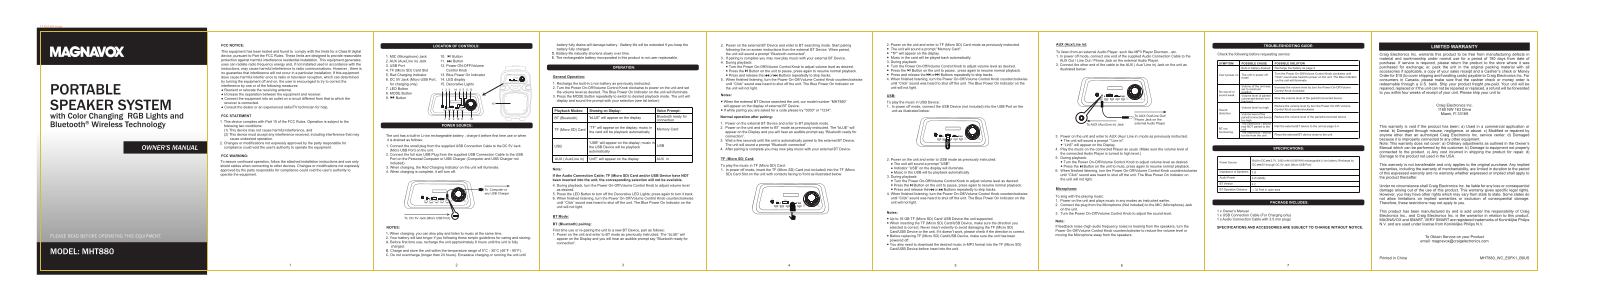 Magnavox MHT880 User Manual